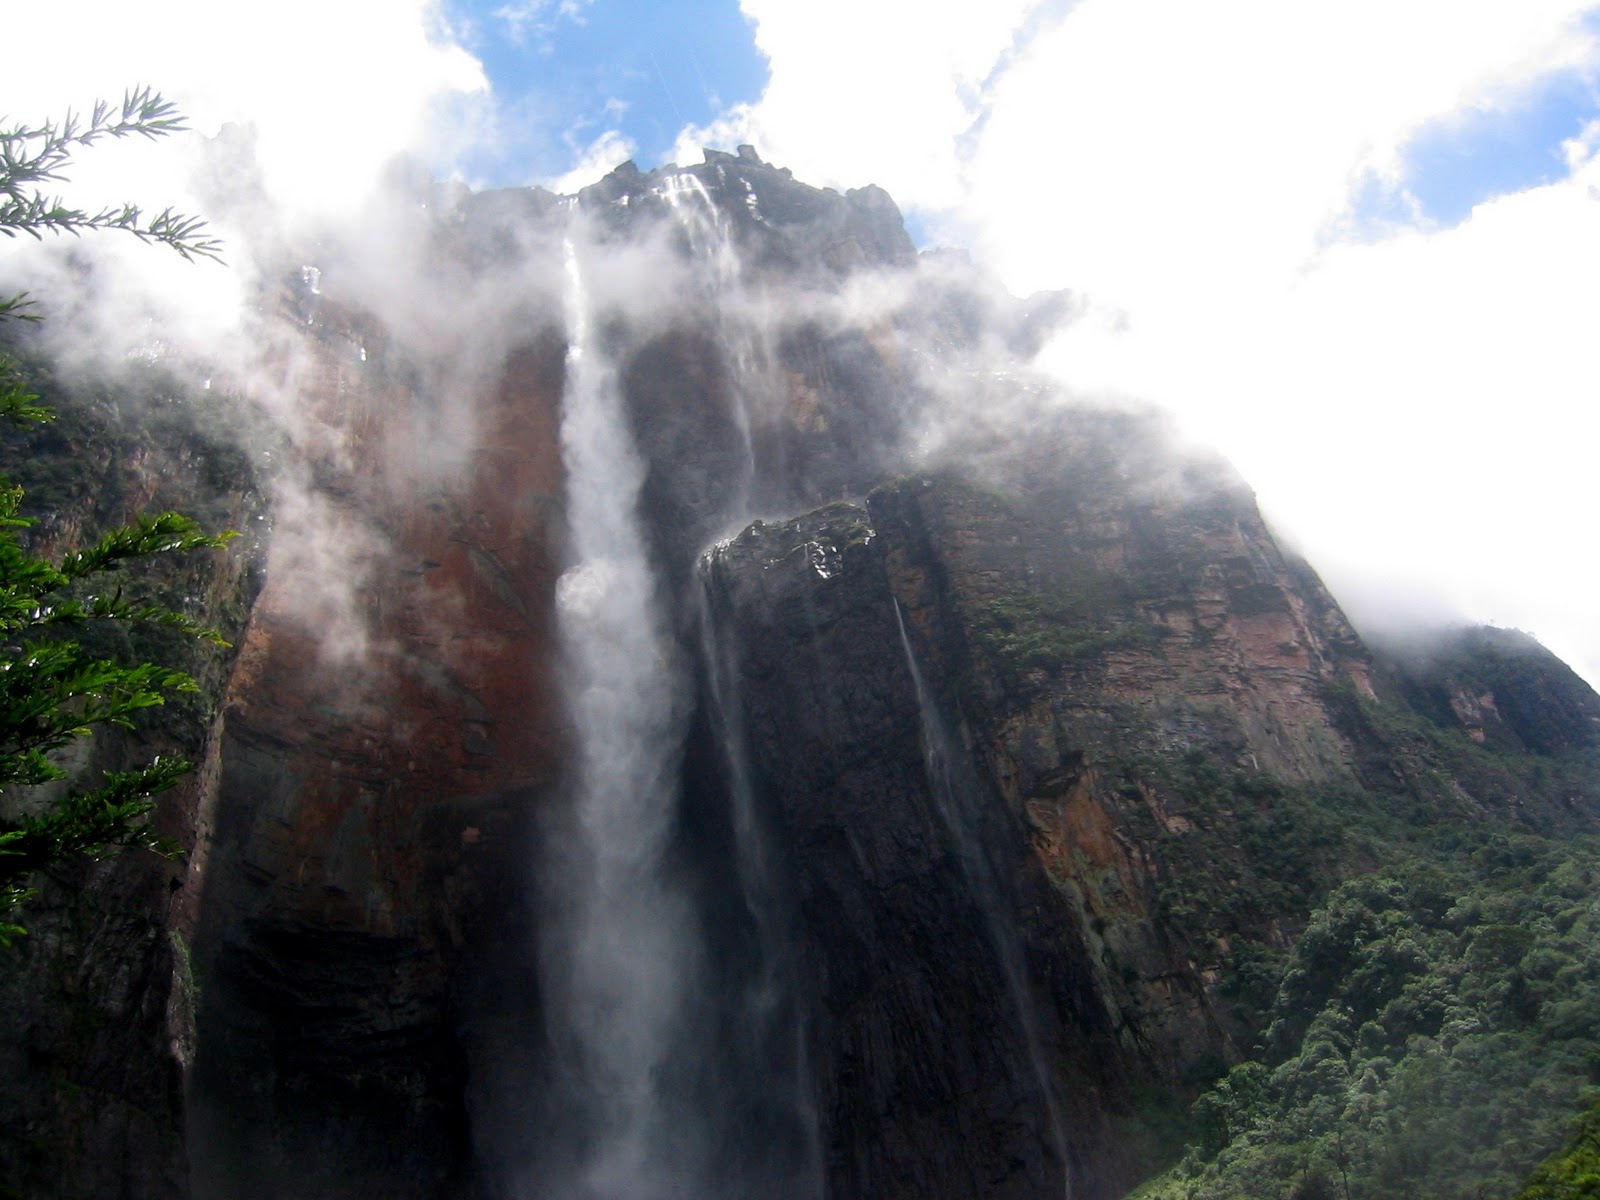 Откуда водопад. Водопад Анхель Венесуэла. Самый высокий водопад в мире Анхель. Водопад Анхель в Южной Америке. Сальто Анхель водопад.